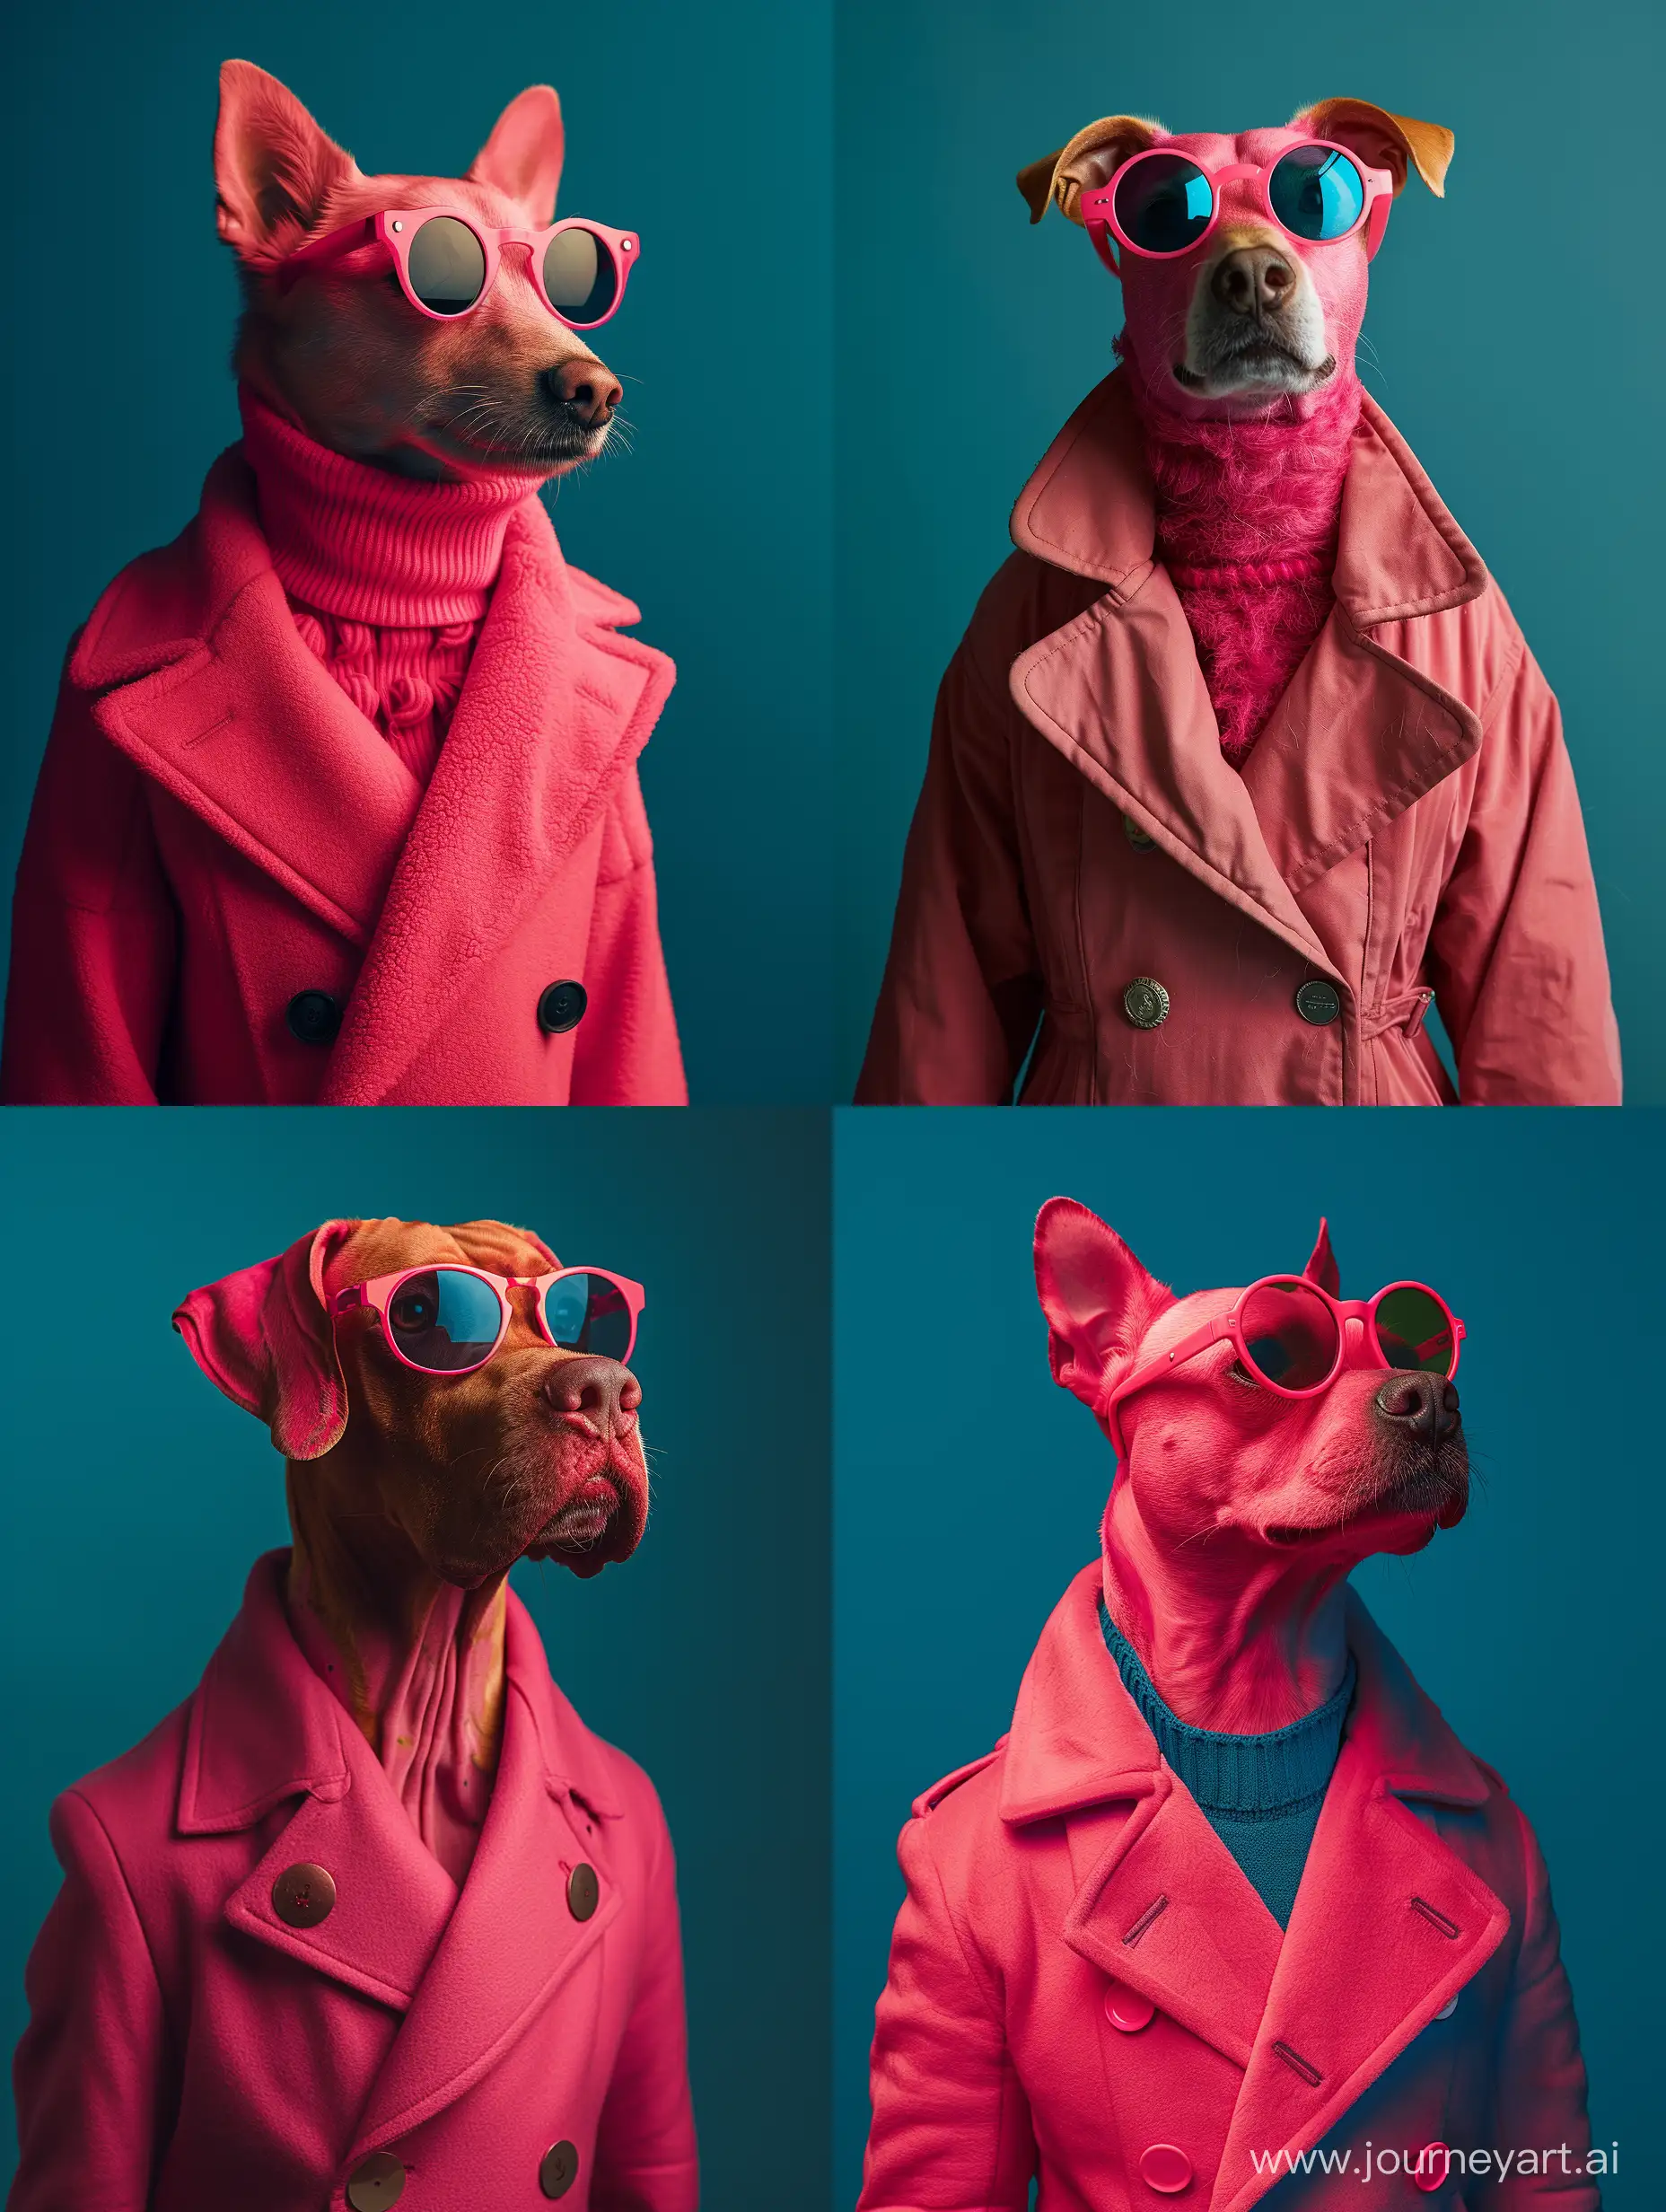 Fashionable-Dog-in-1960s-MidCentury-SpaceAge-Attire